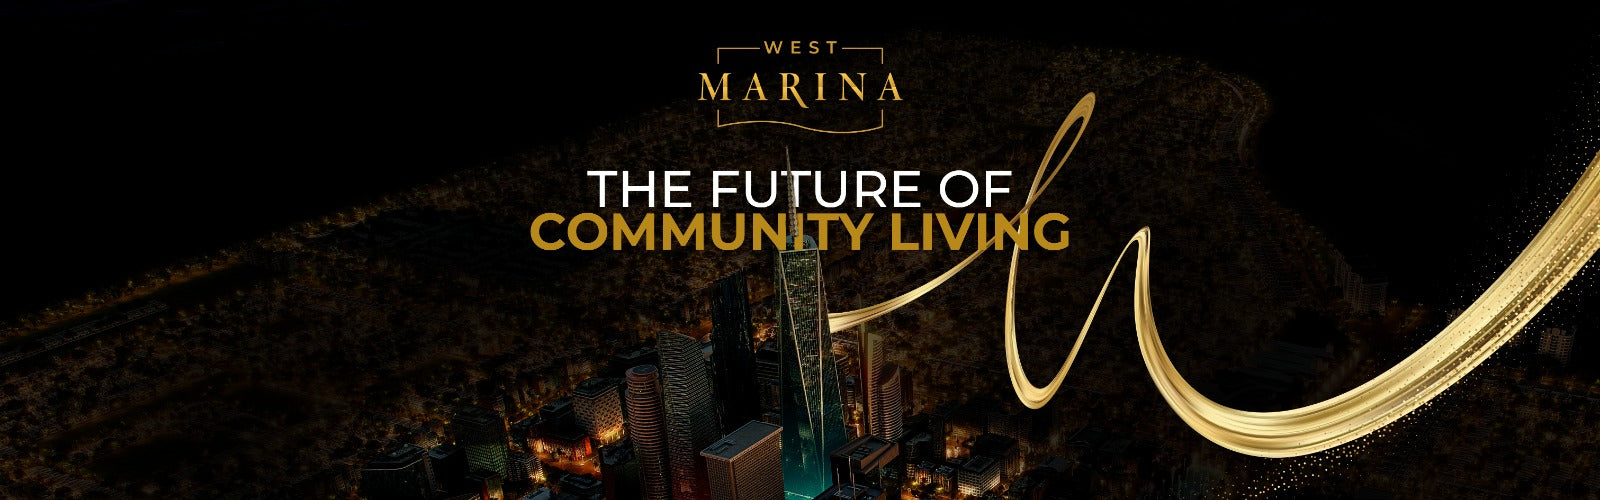 West Marina - The Future of Community Living